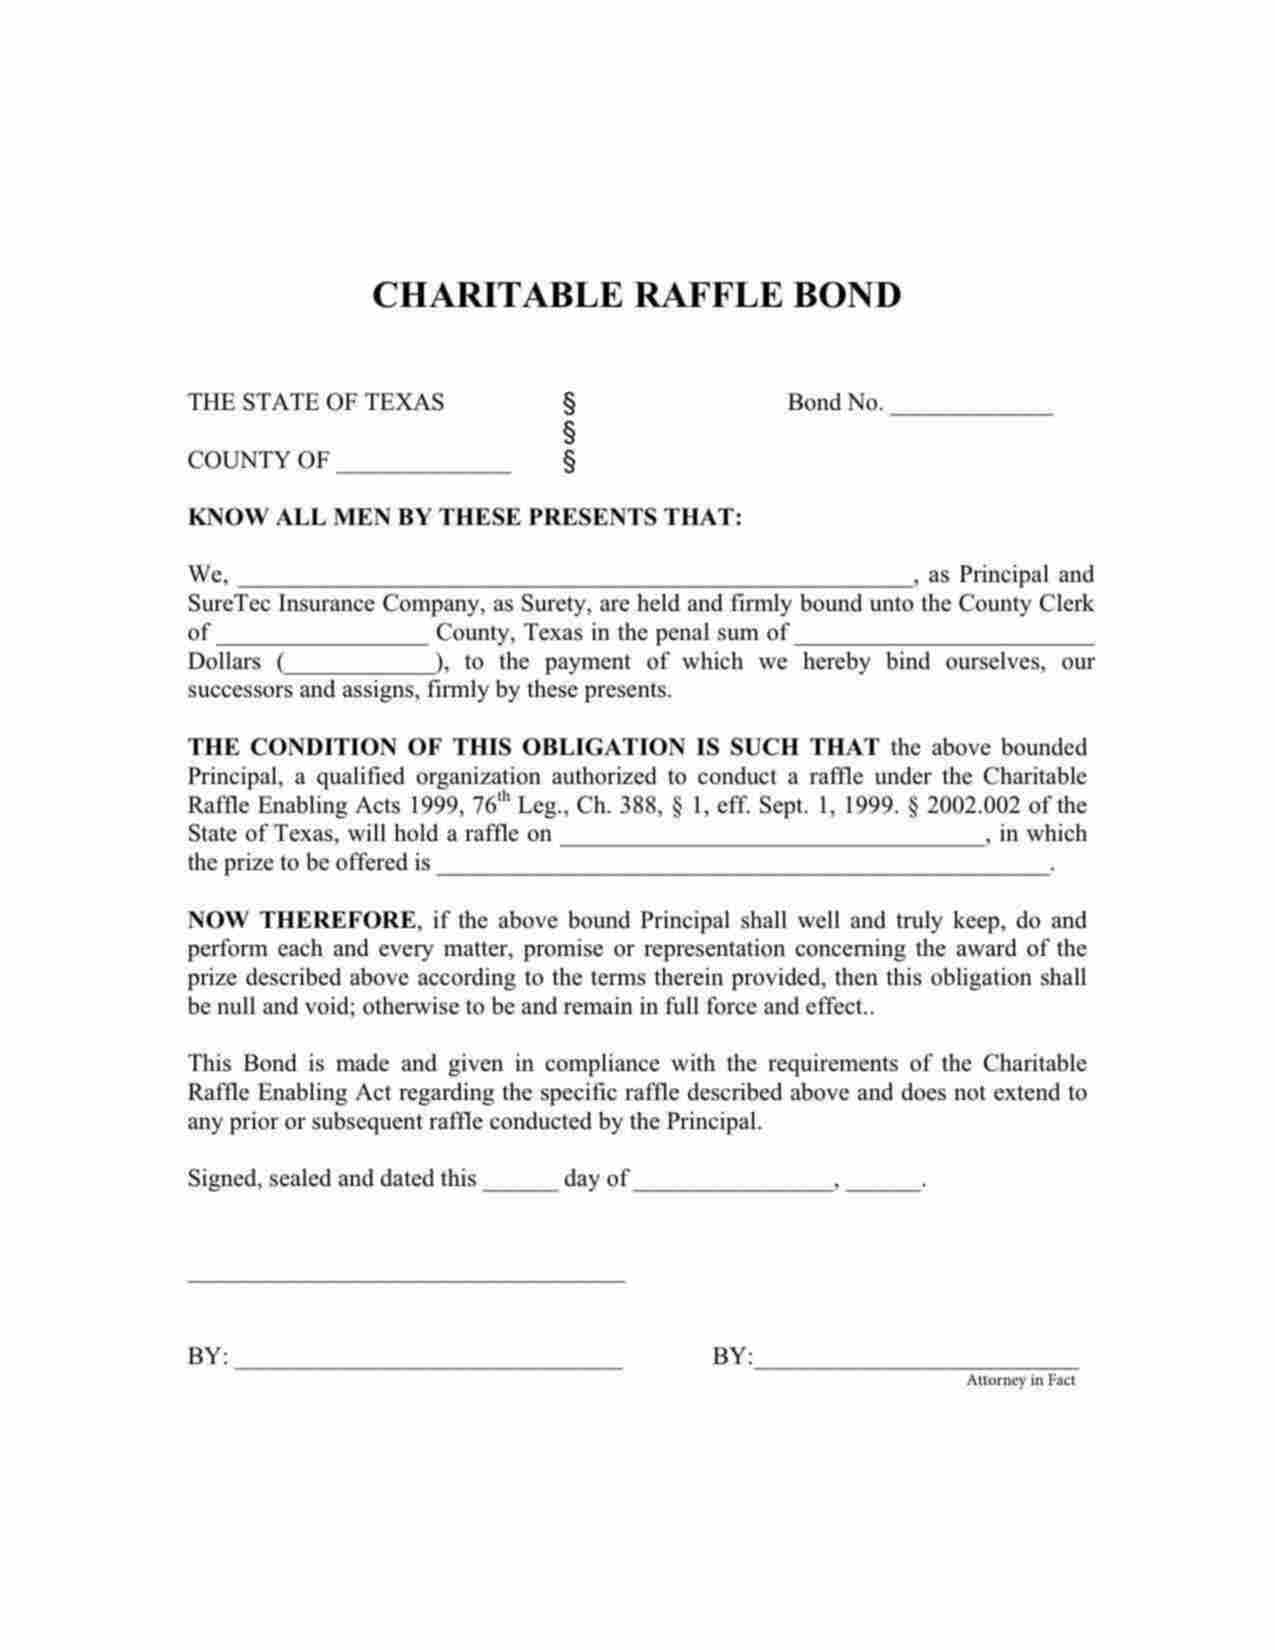 Texas Charitable Raffle Bond Form